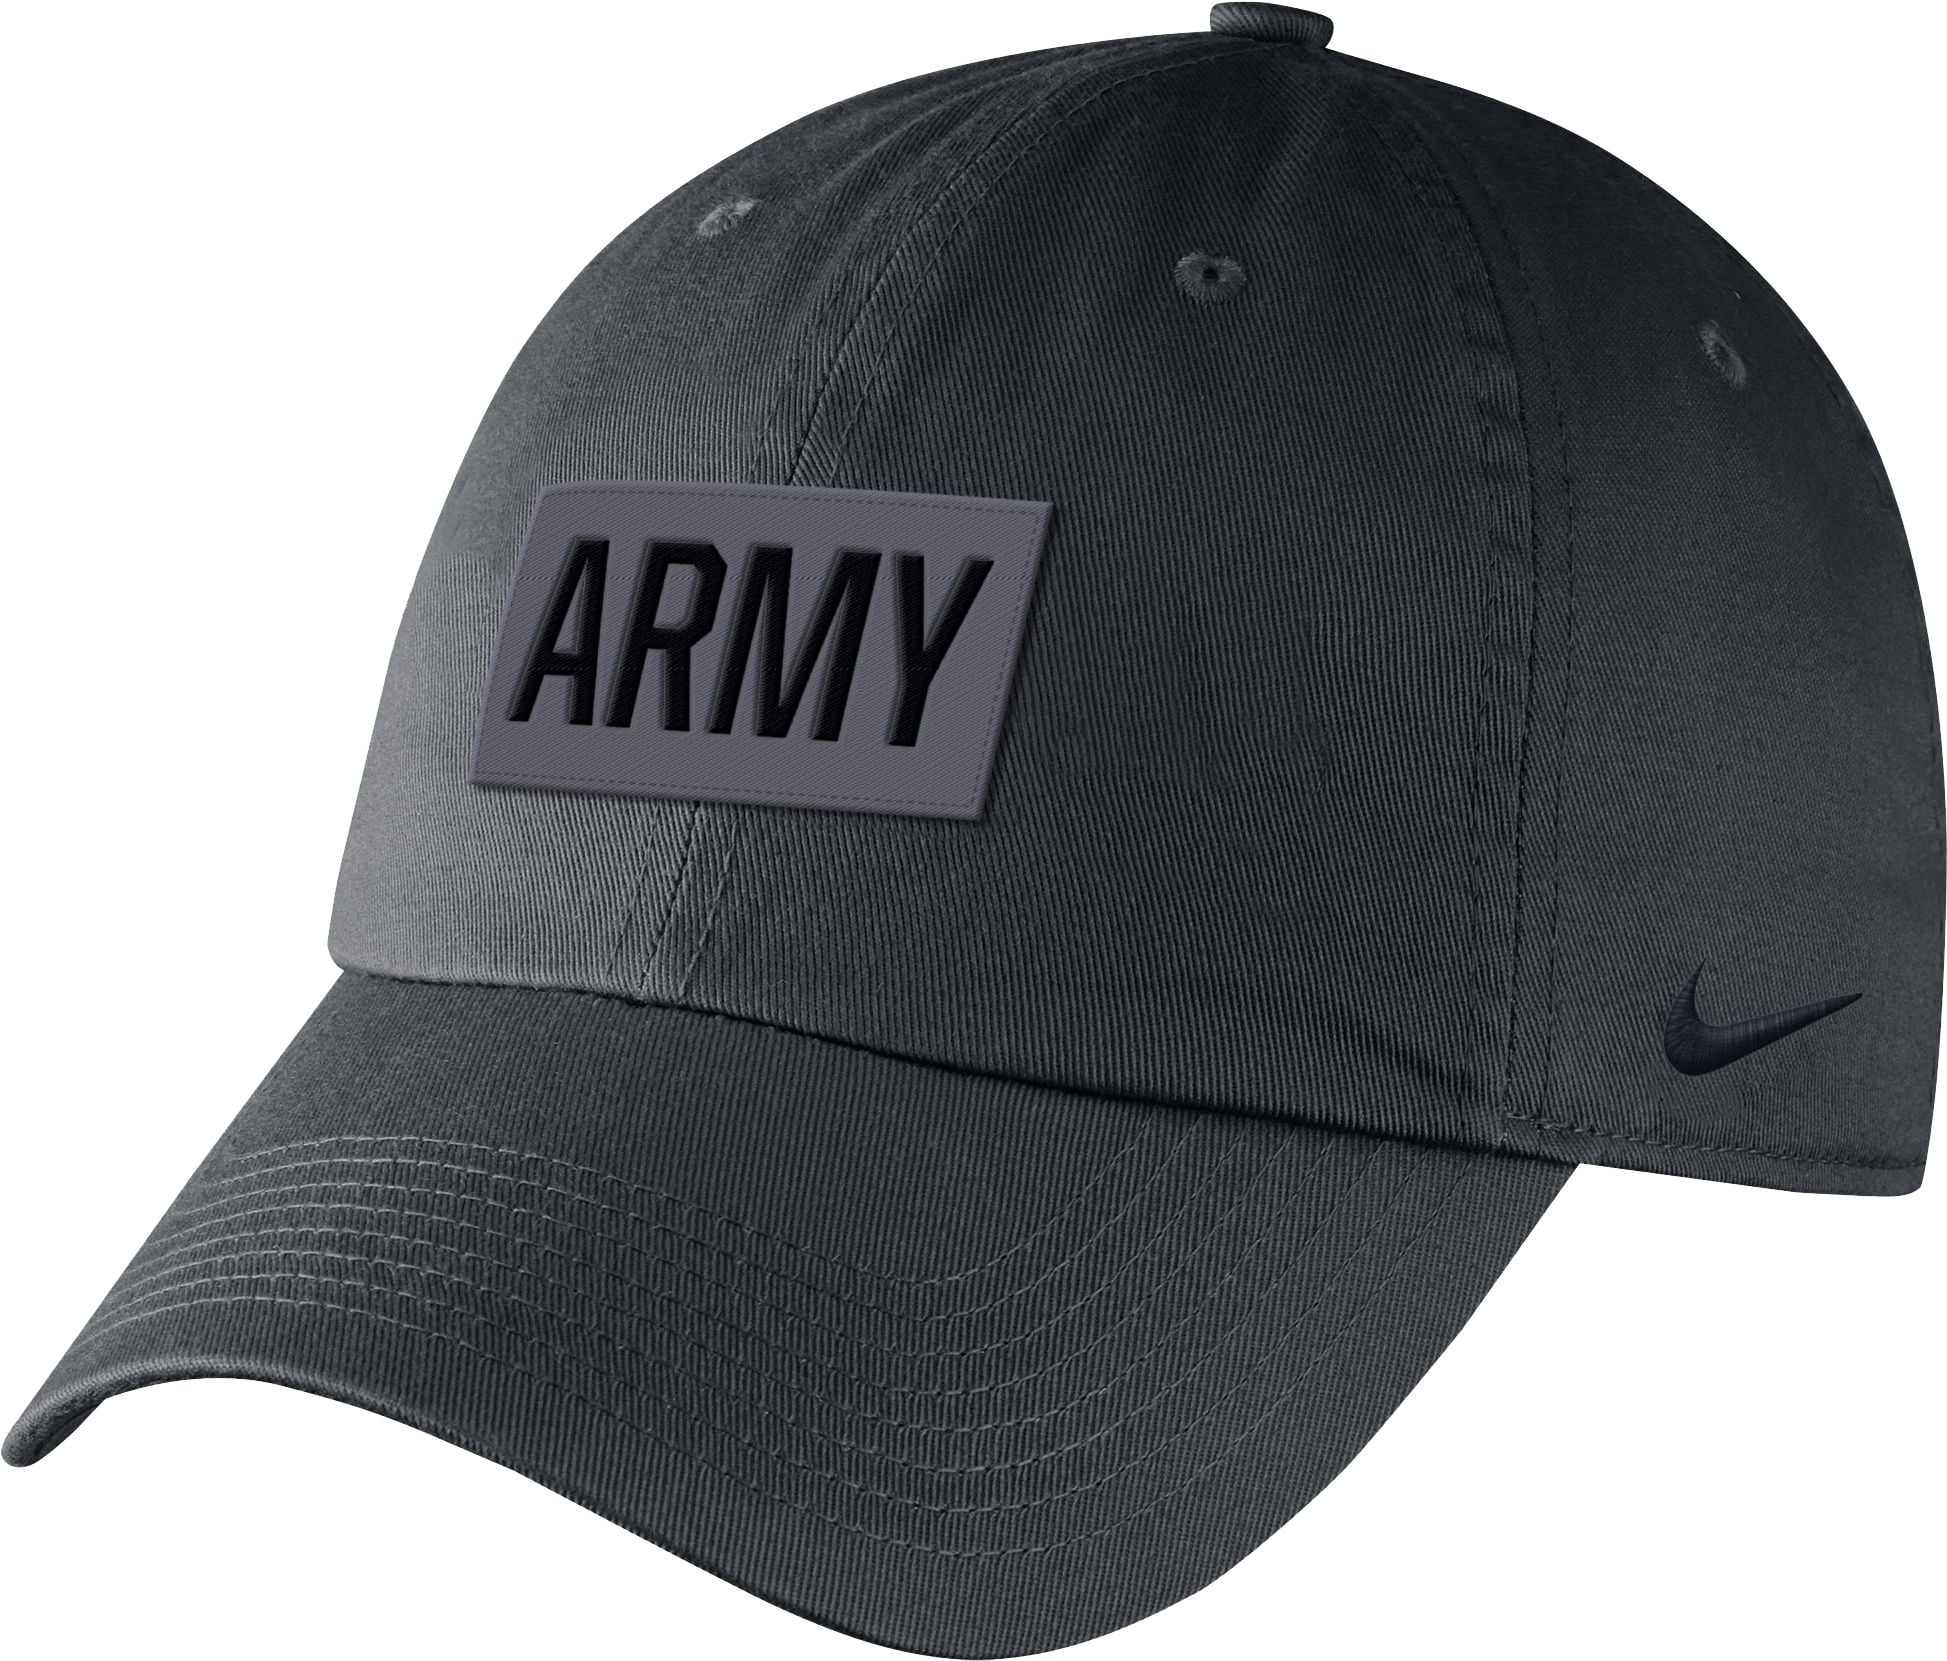 nike army cap